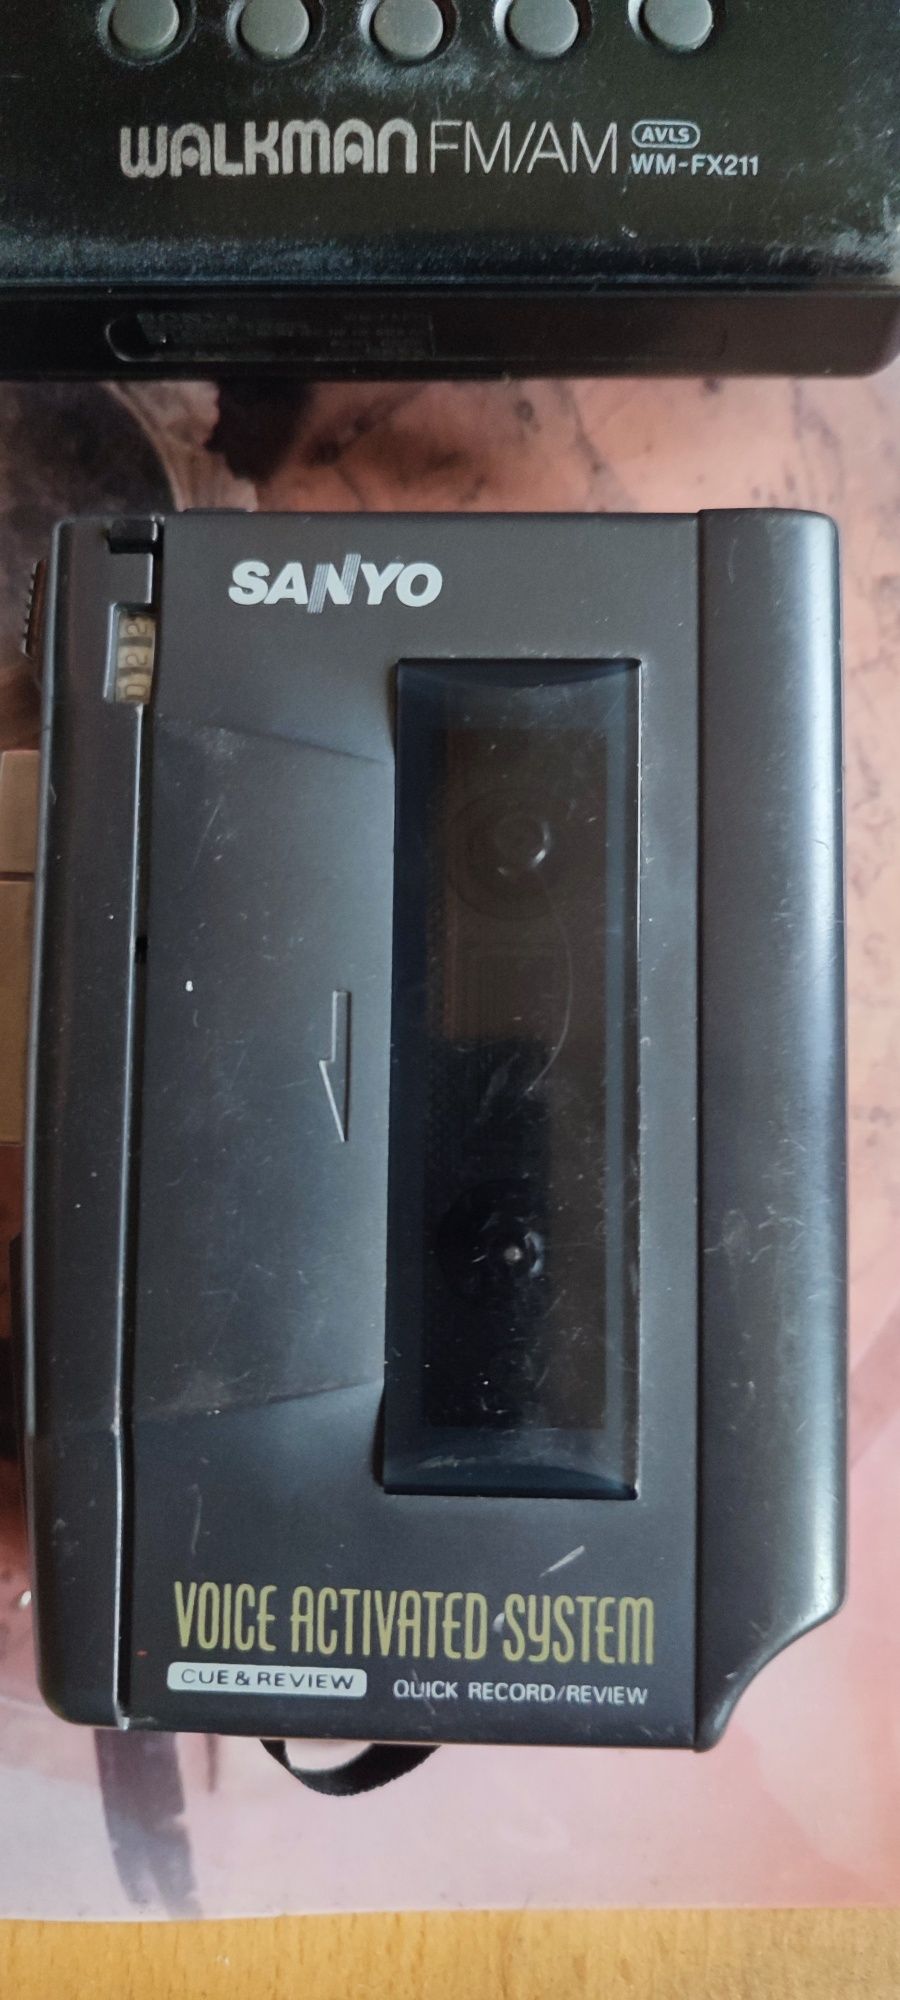 Sanyo, Sony, Sunny - Walkman-uri.